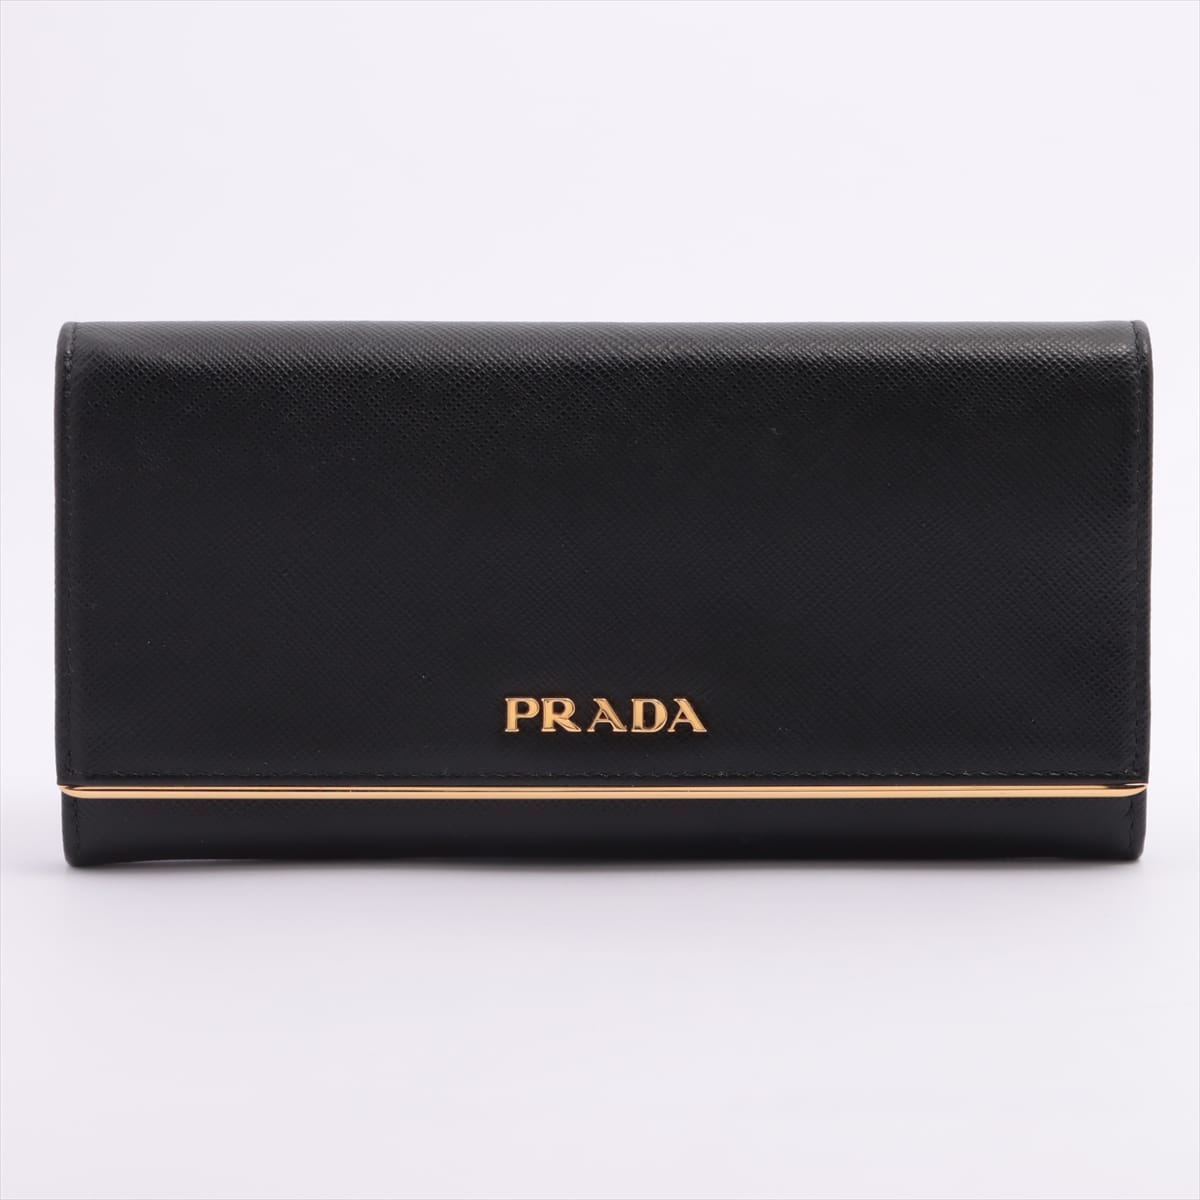 Prada Saffiano Leather Wallet Black×Gold